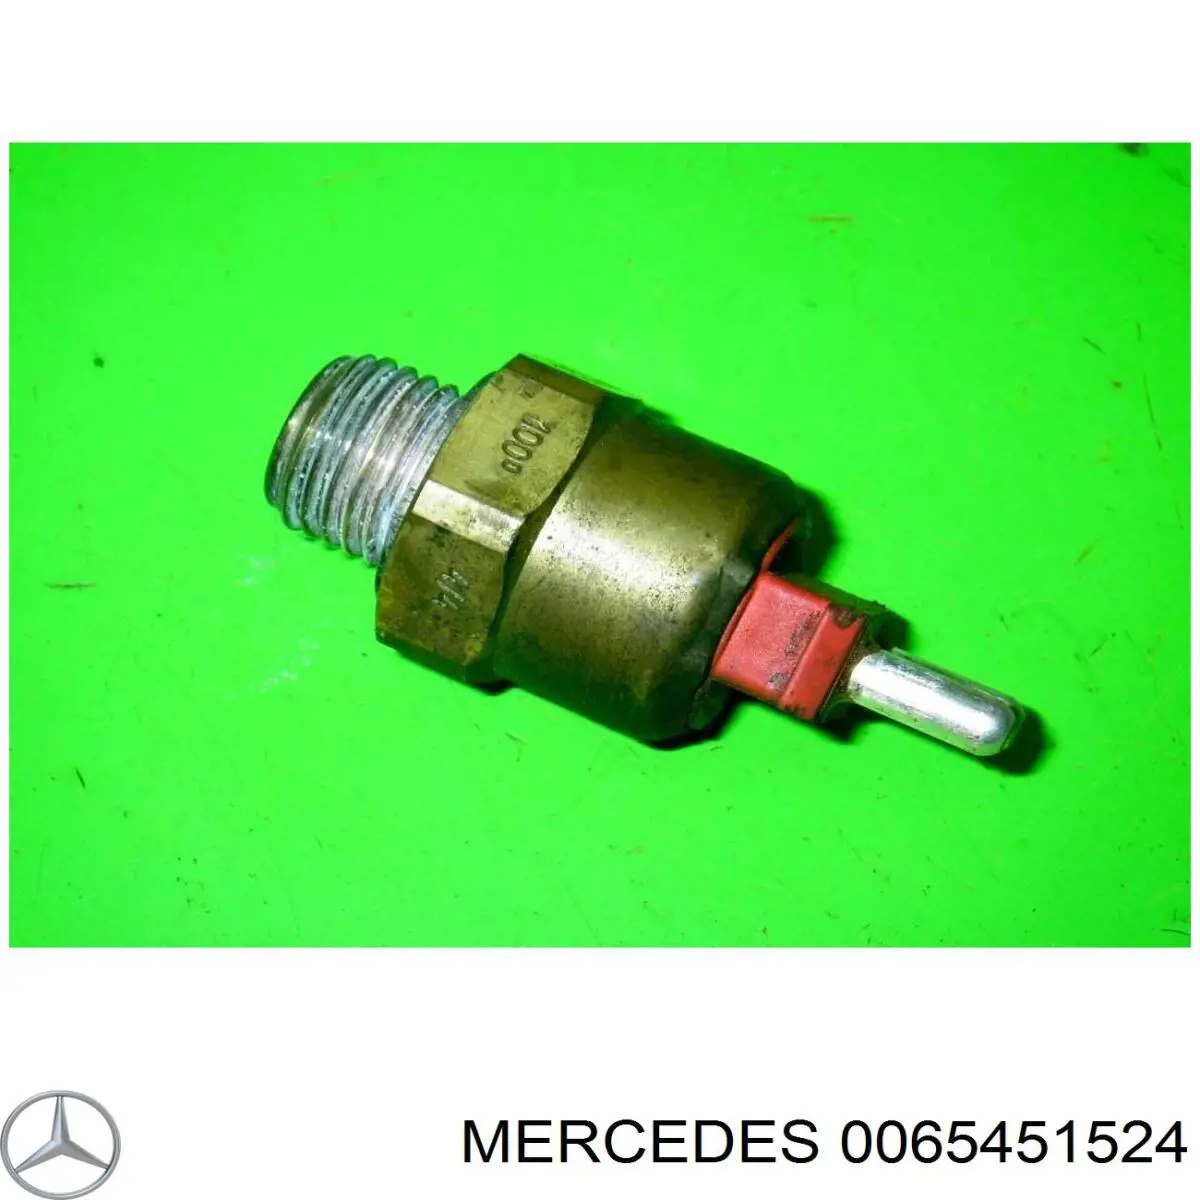 0065451524 Mercedes sensor, temperatura del refrigerante (encendido el ventilador del radiador)